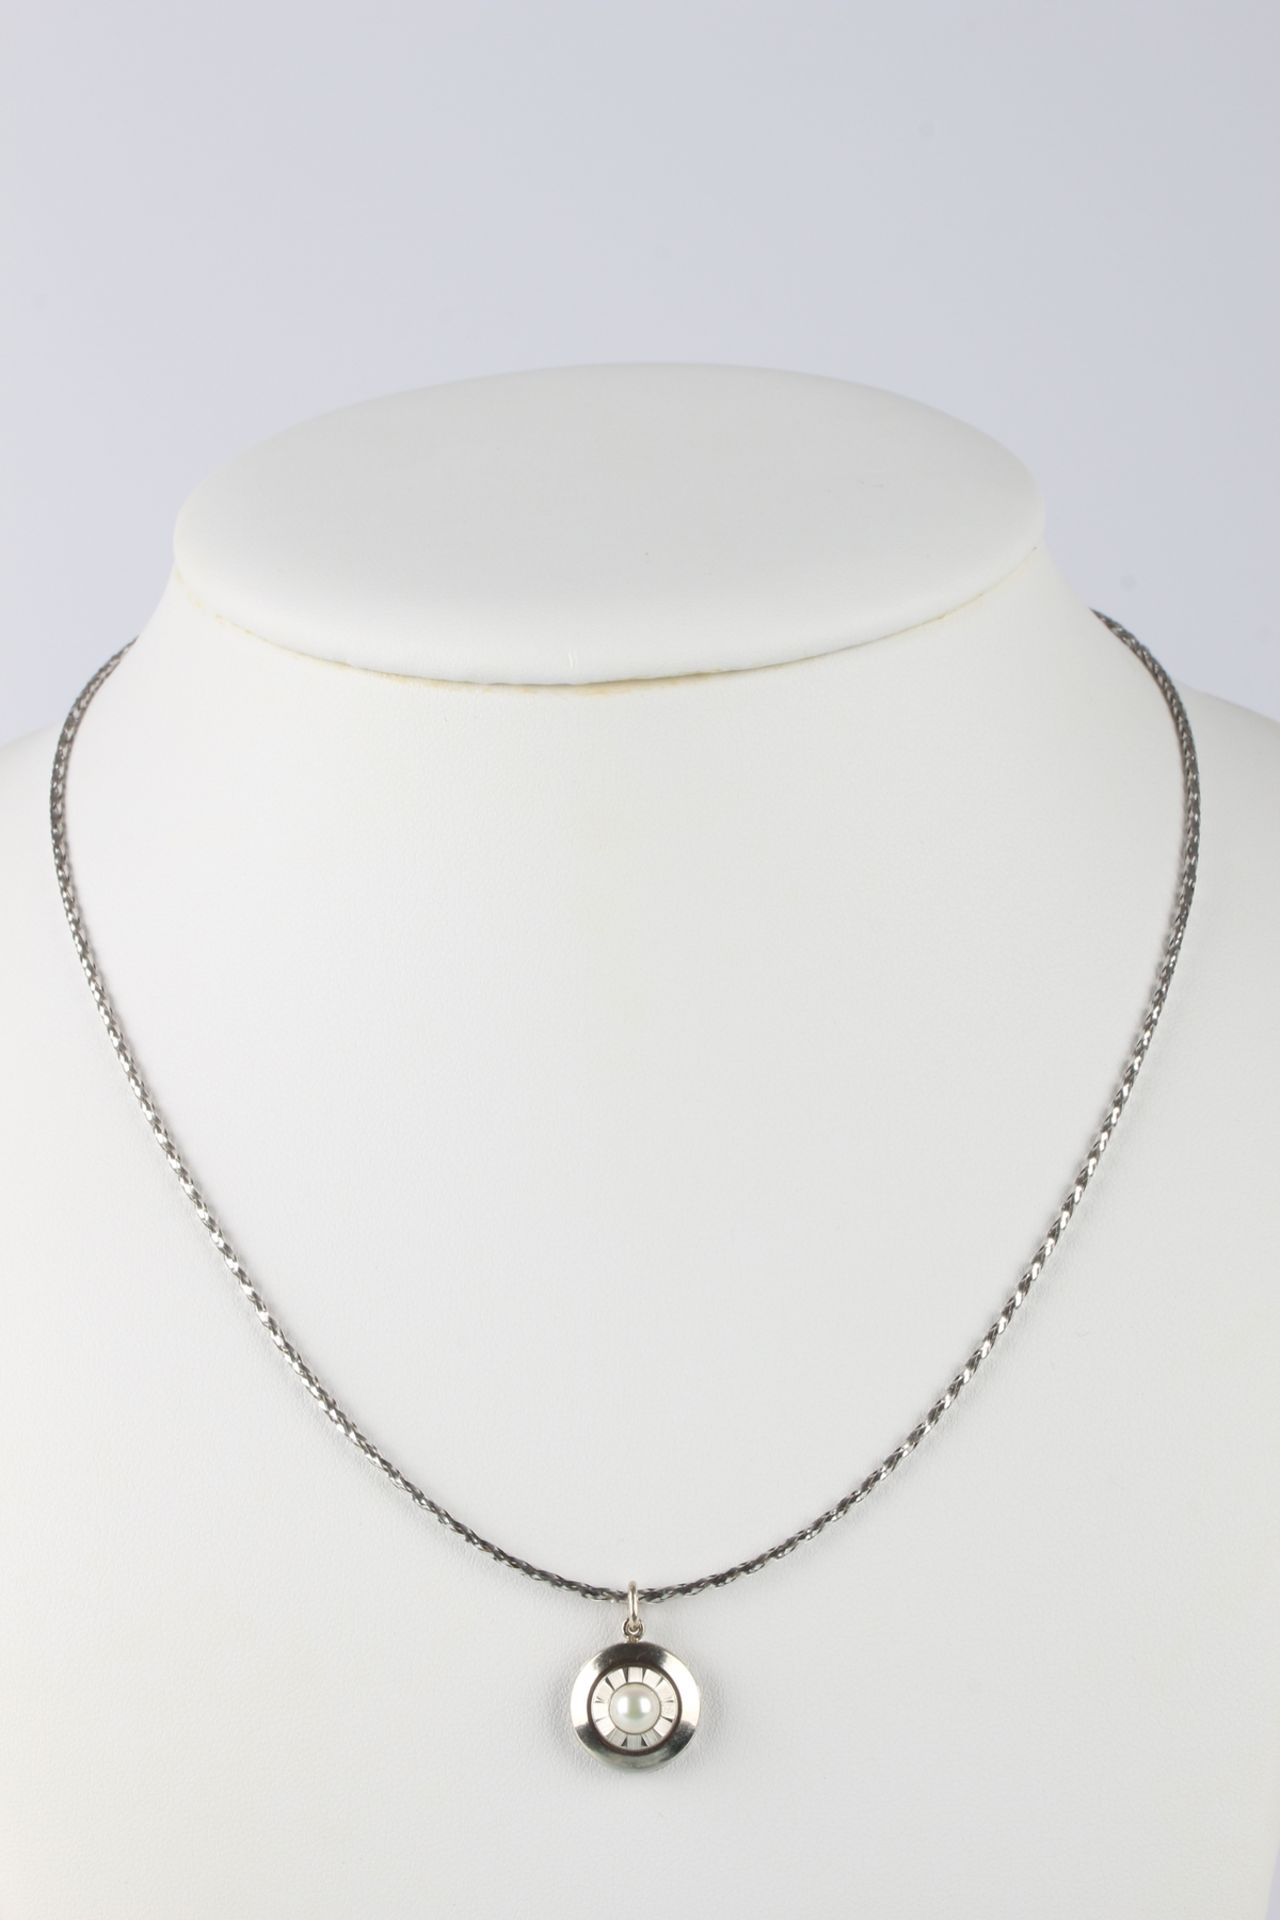 585 Gold Kette mit Perlenanhänger, gold necklace with pearl pendant, - Bild 3 aus 6